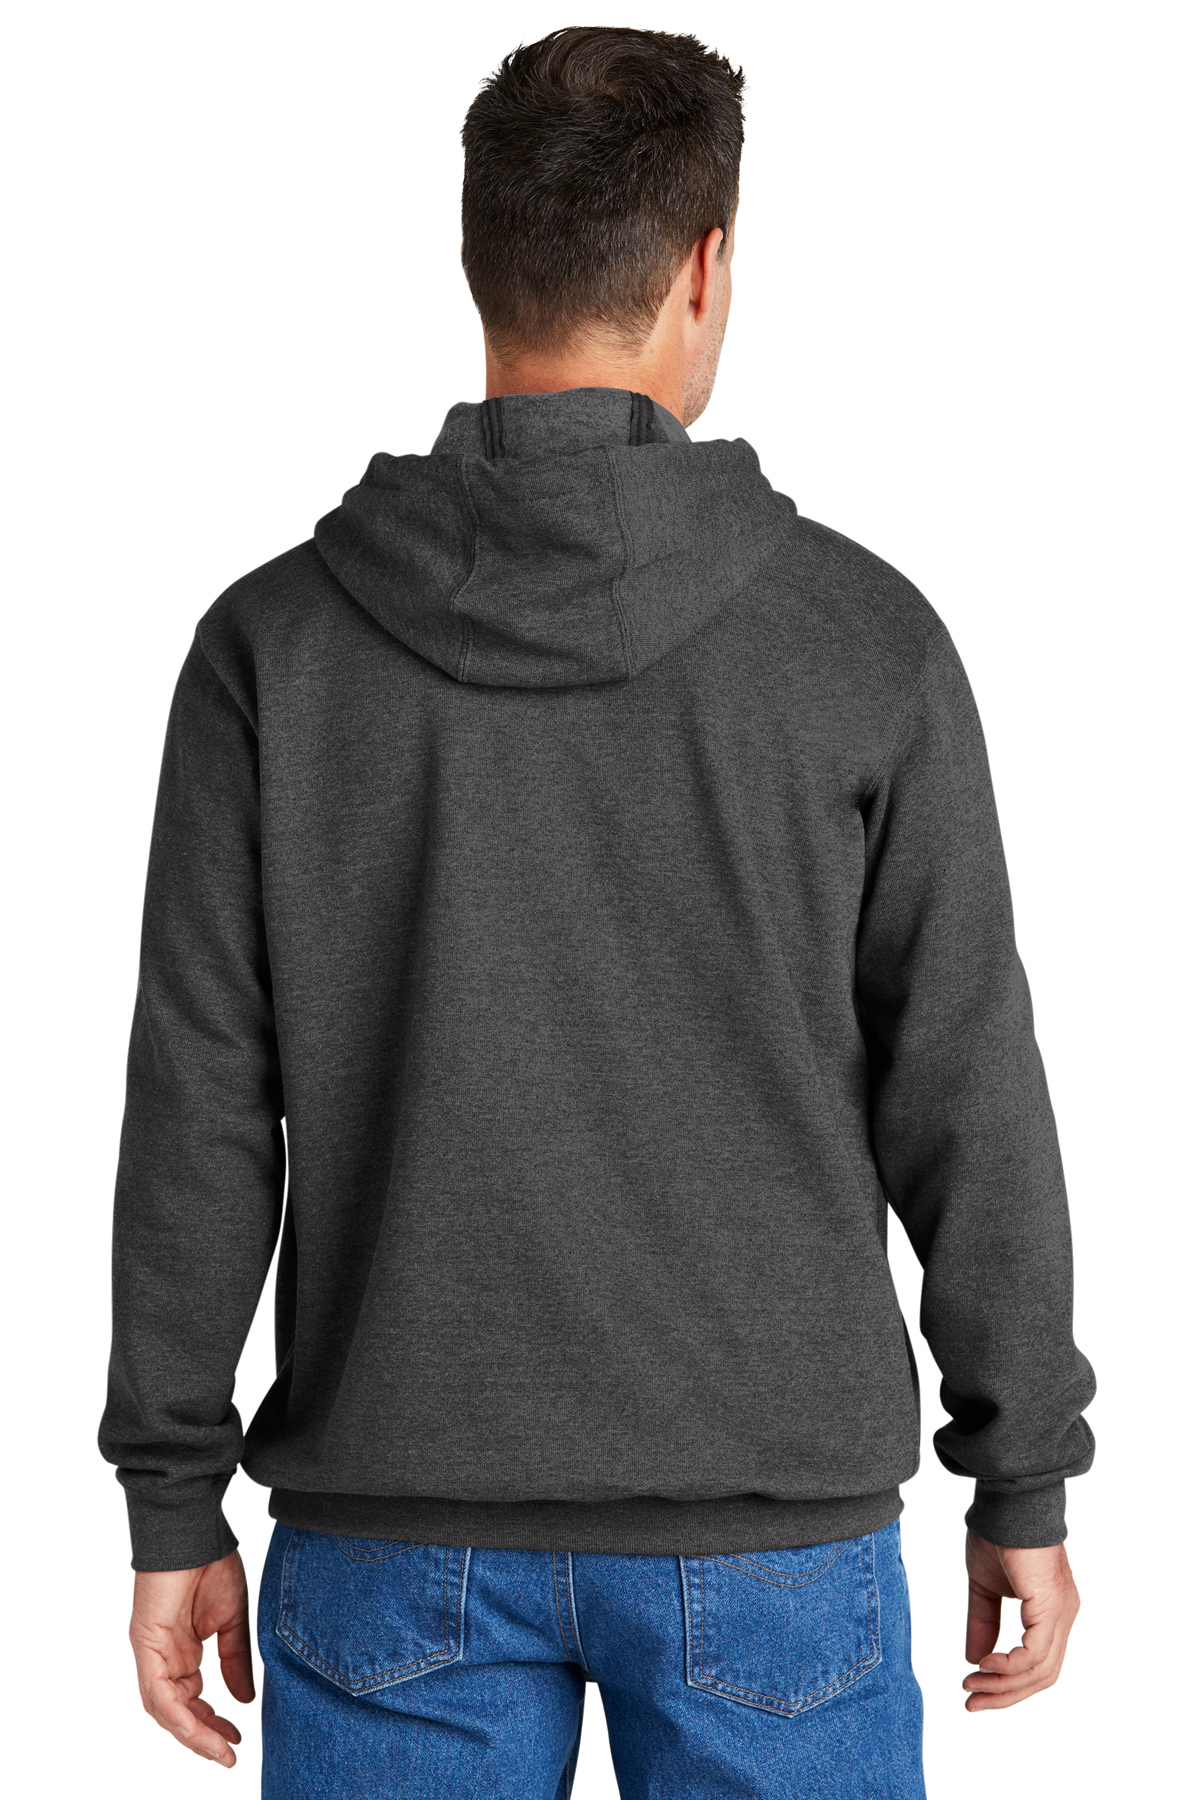 Carhartt Midweight Hooded Logo Sweatshirt | Product | SanMar